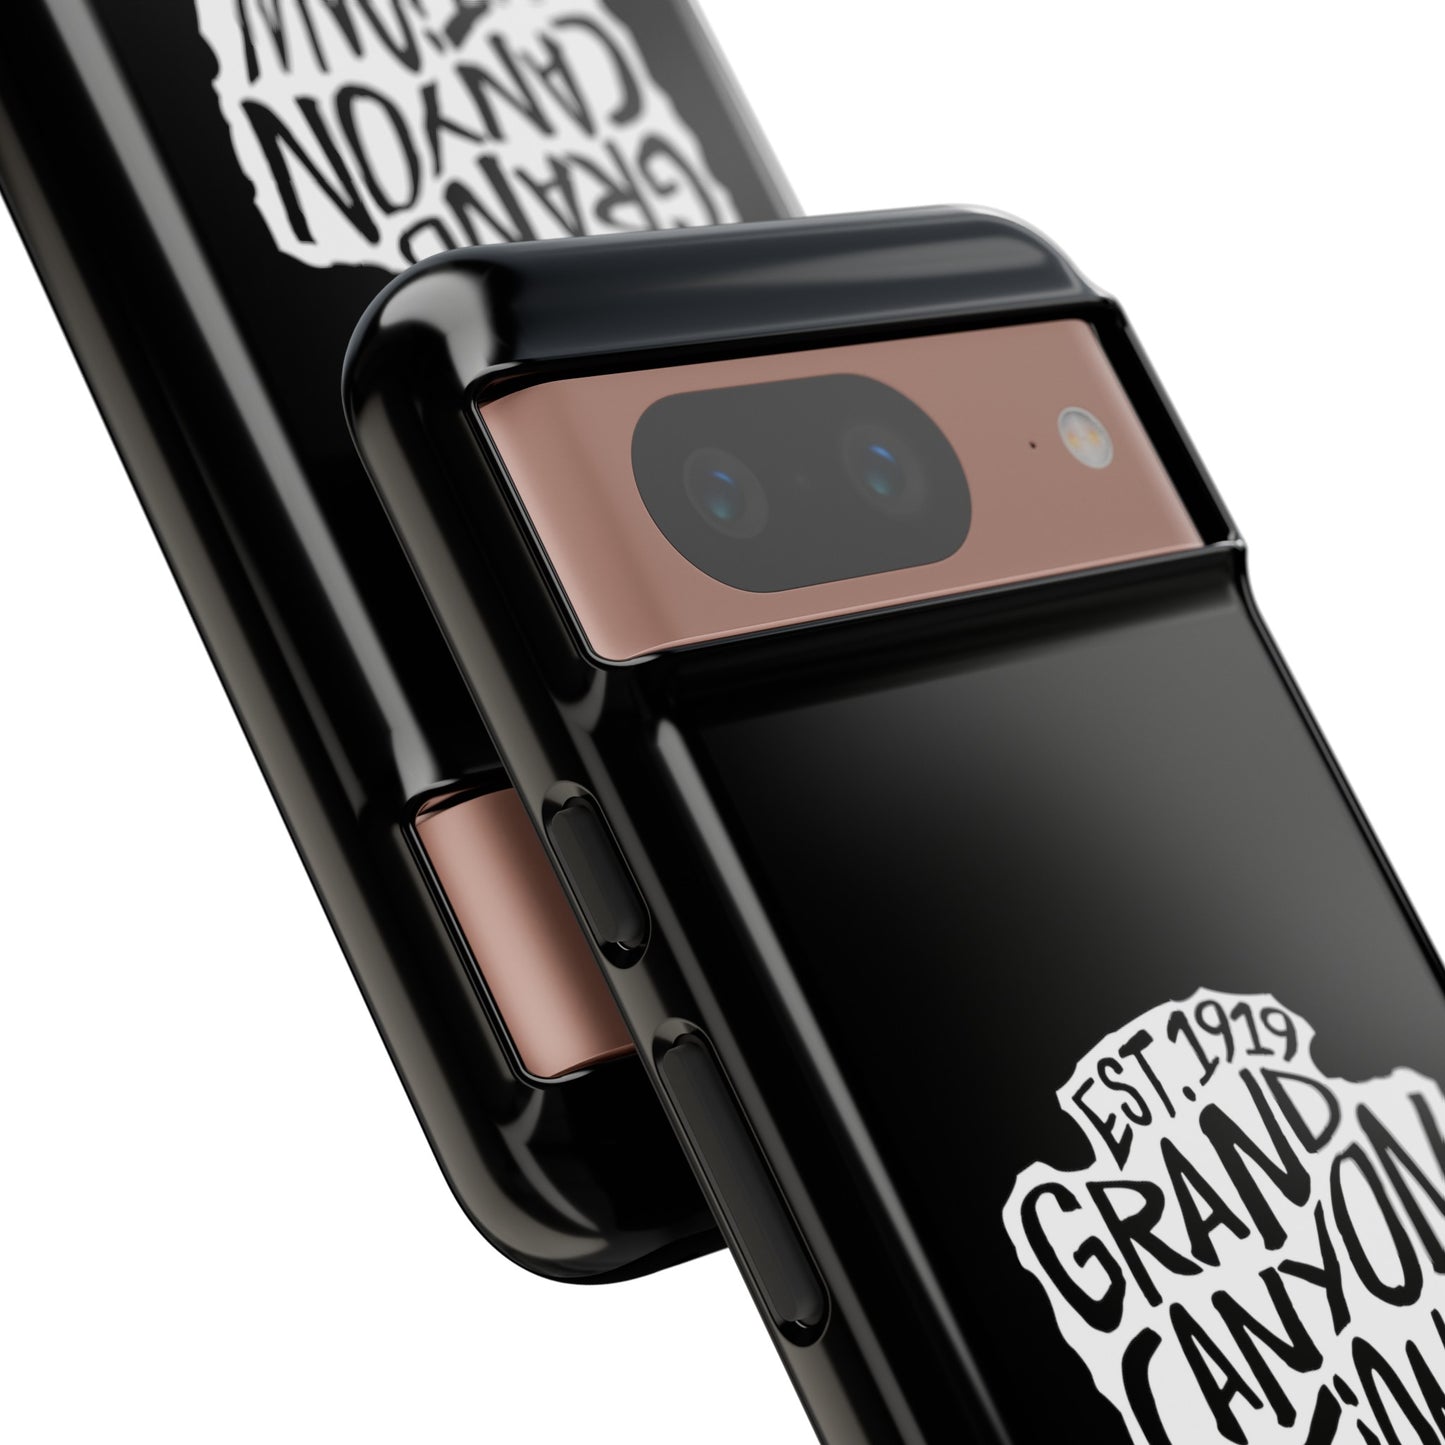 Grand Canyon National Park Phone Case - Arrowhead Design